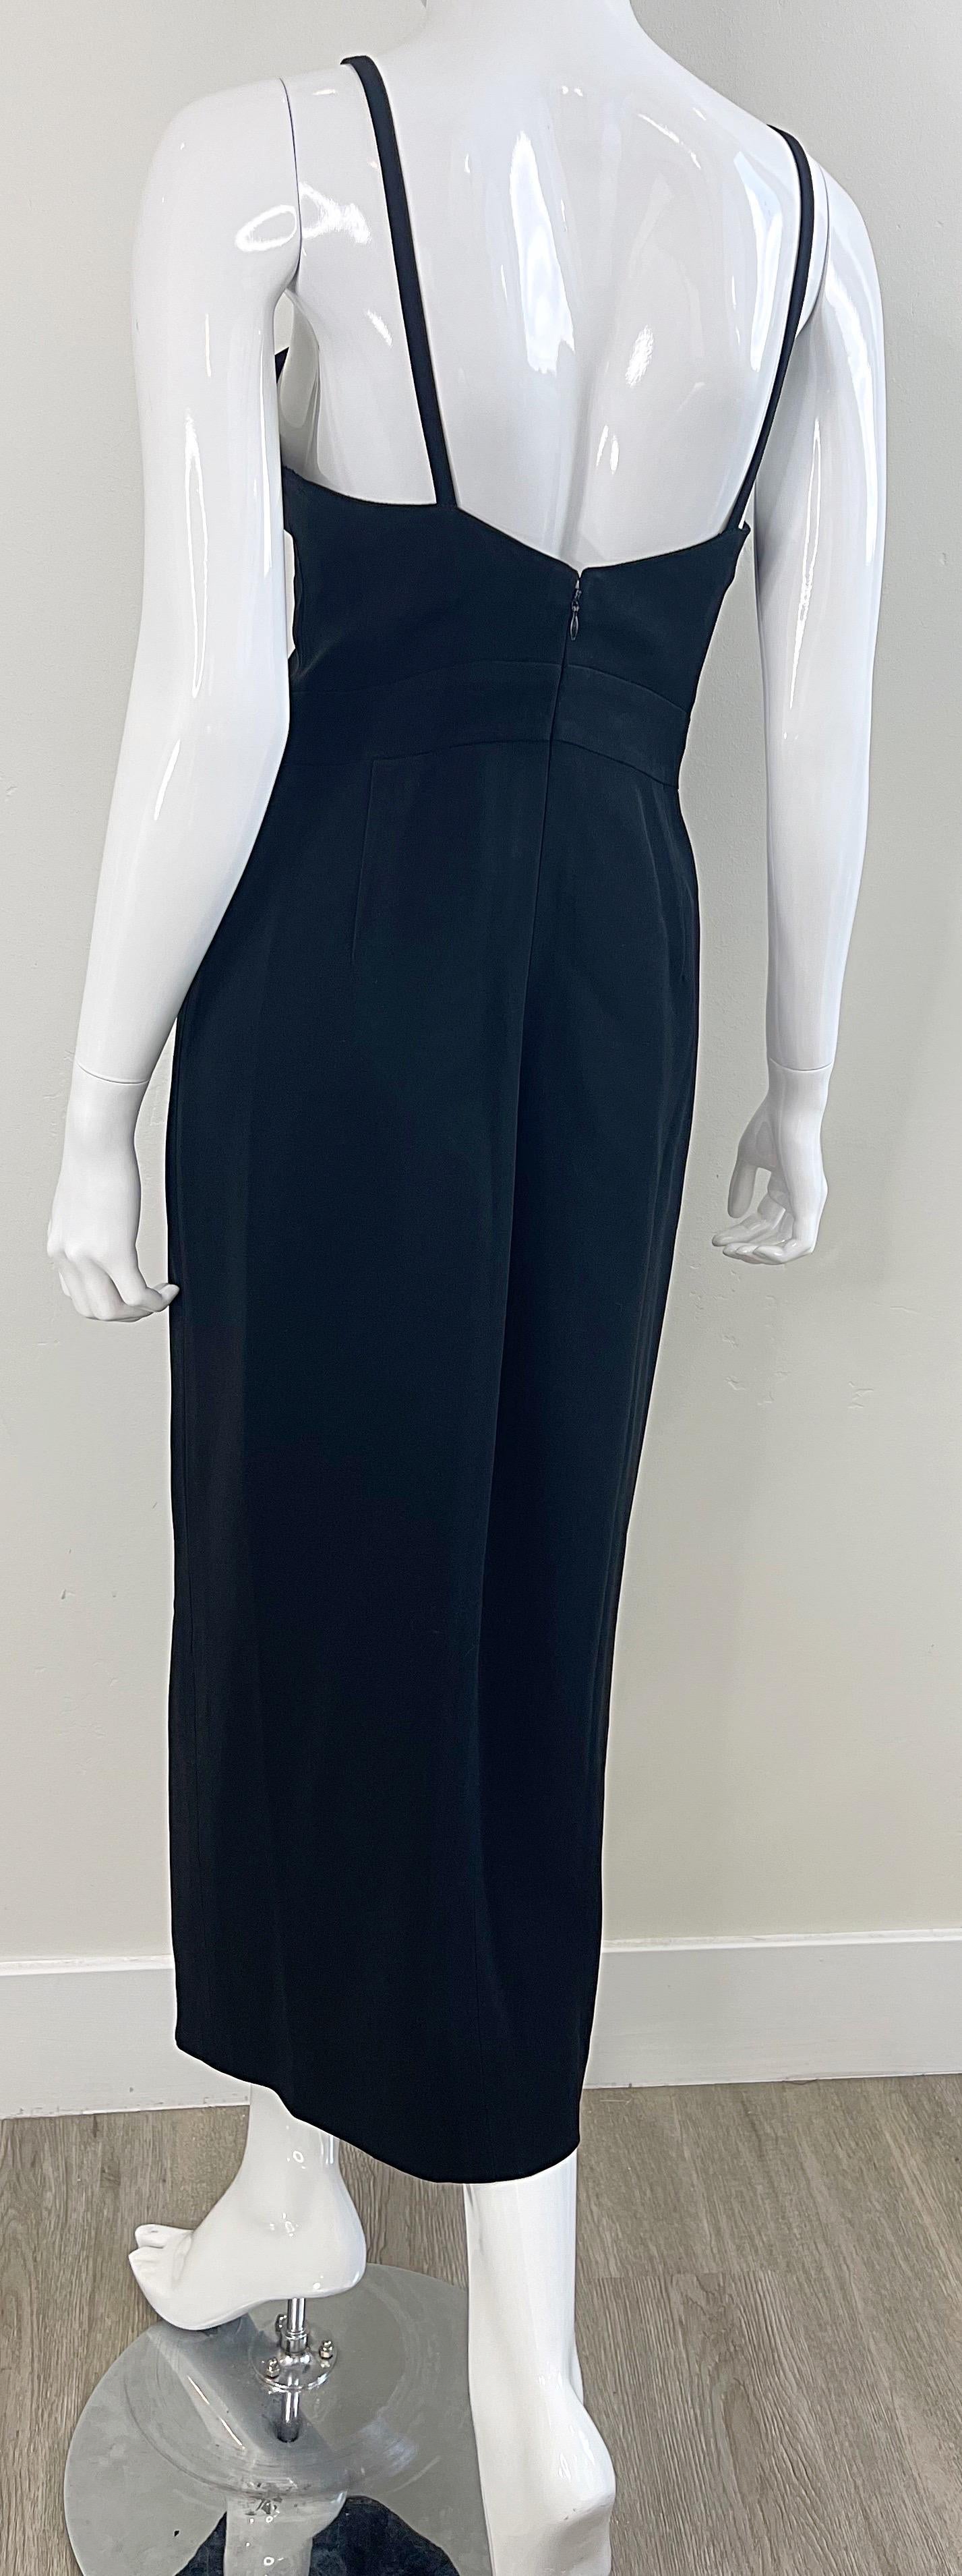 Karl Lagerfeld 1990s Black Sleeveless Timeless Black Vintage 90s Gown Maxi Dress For Sale 2